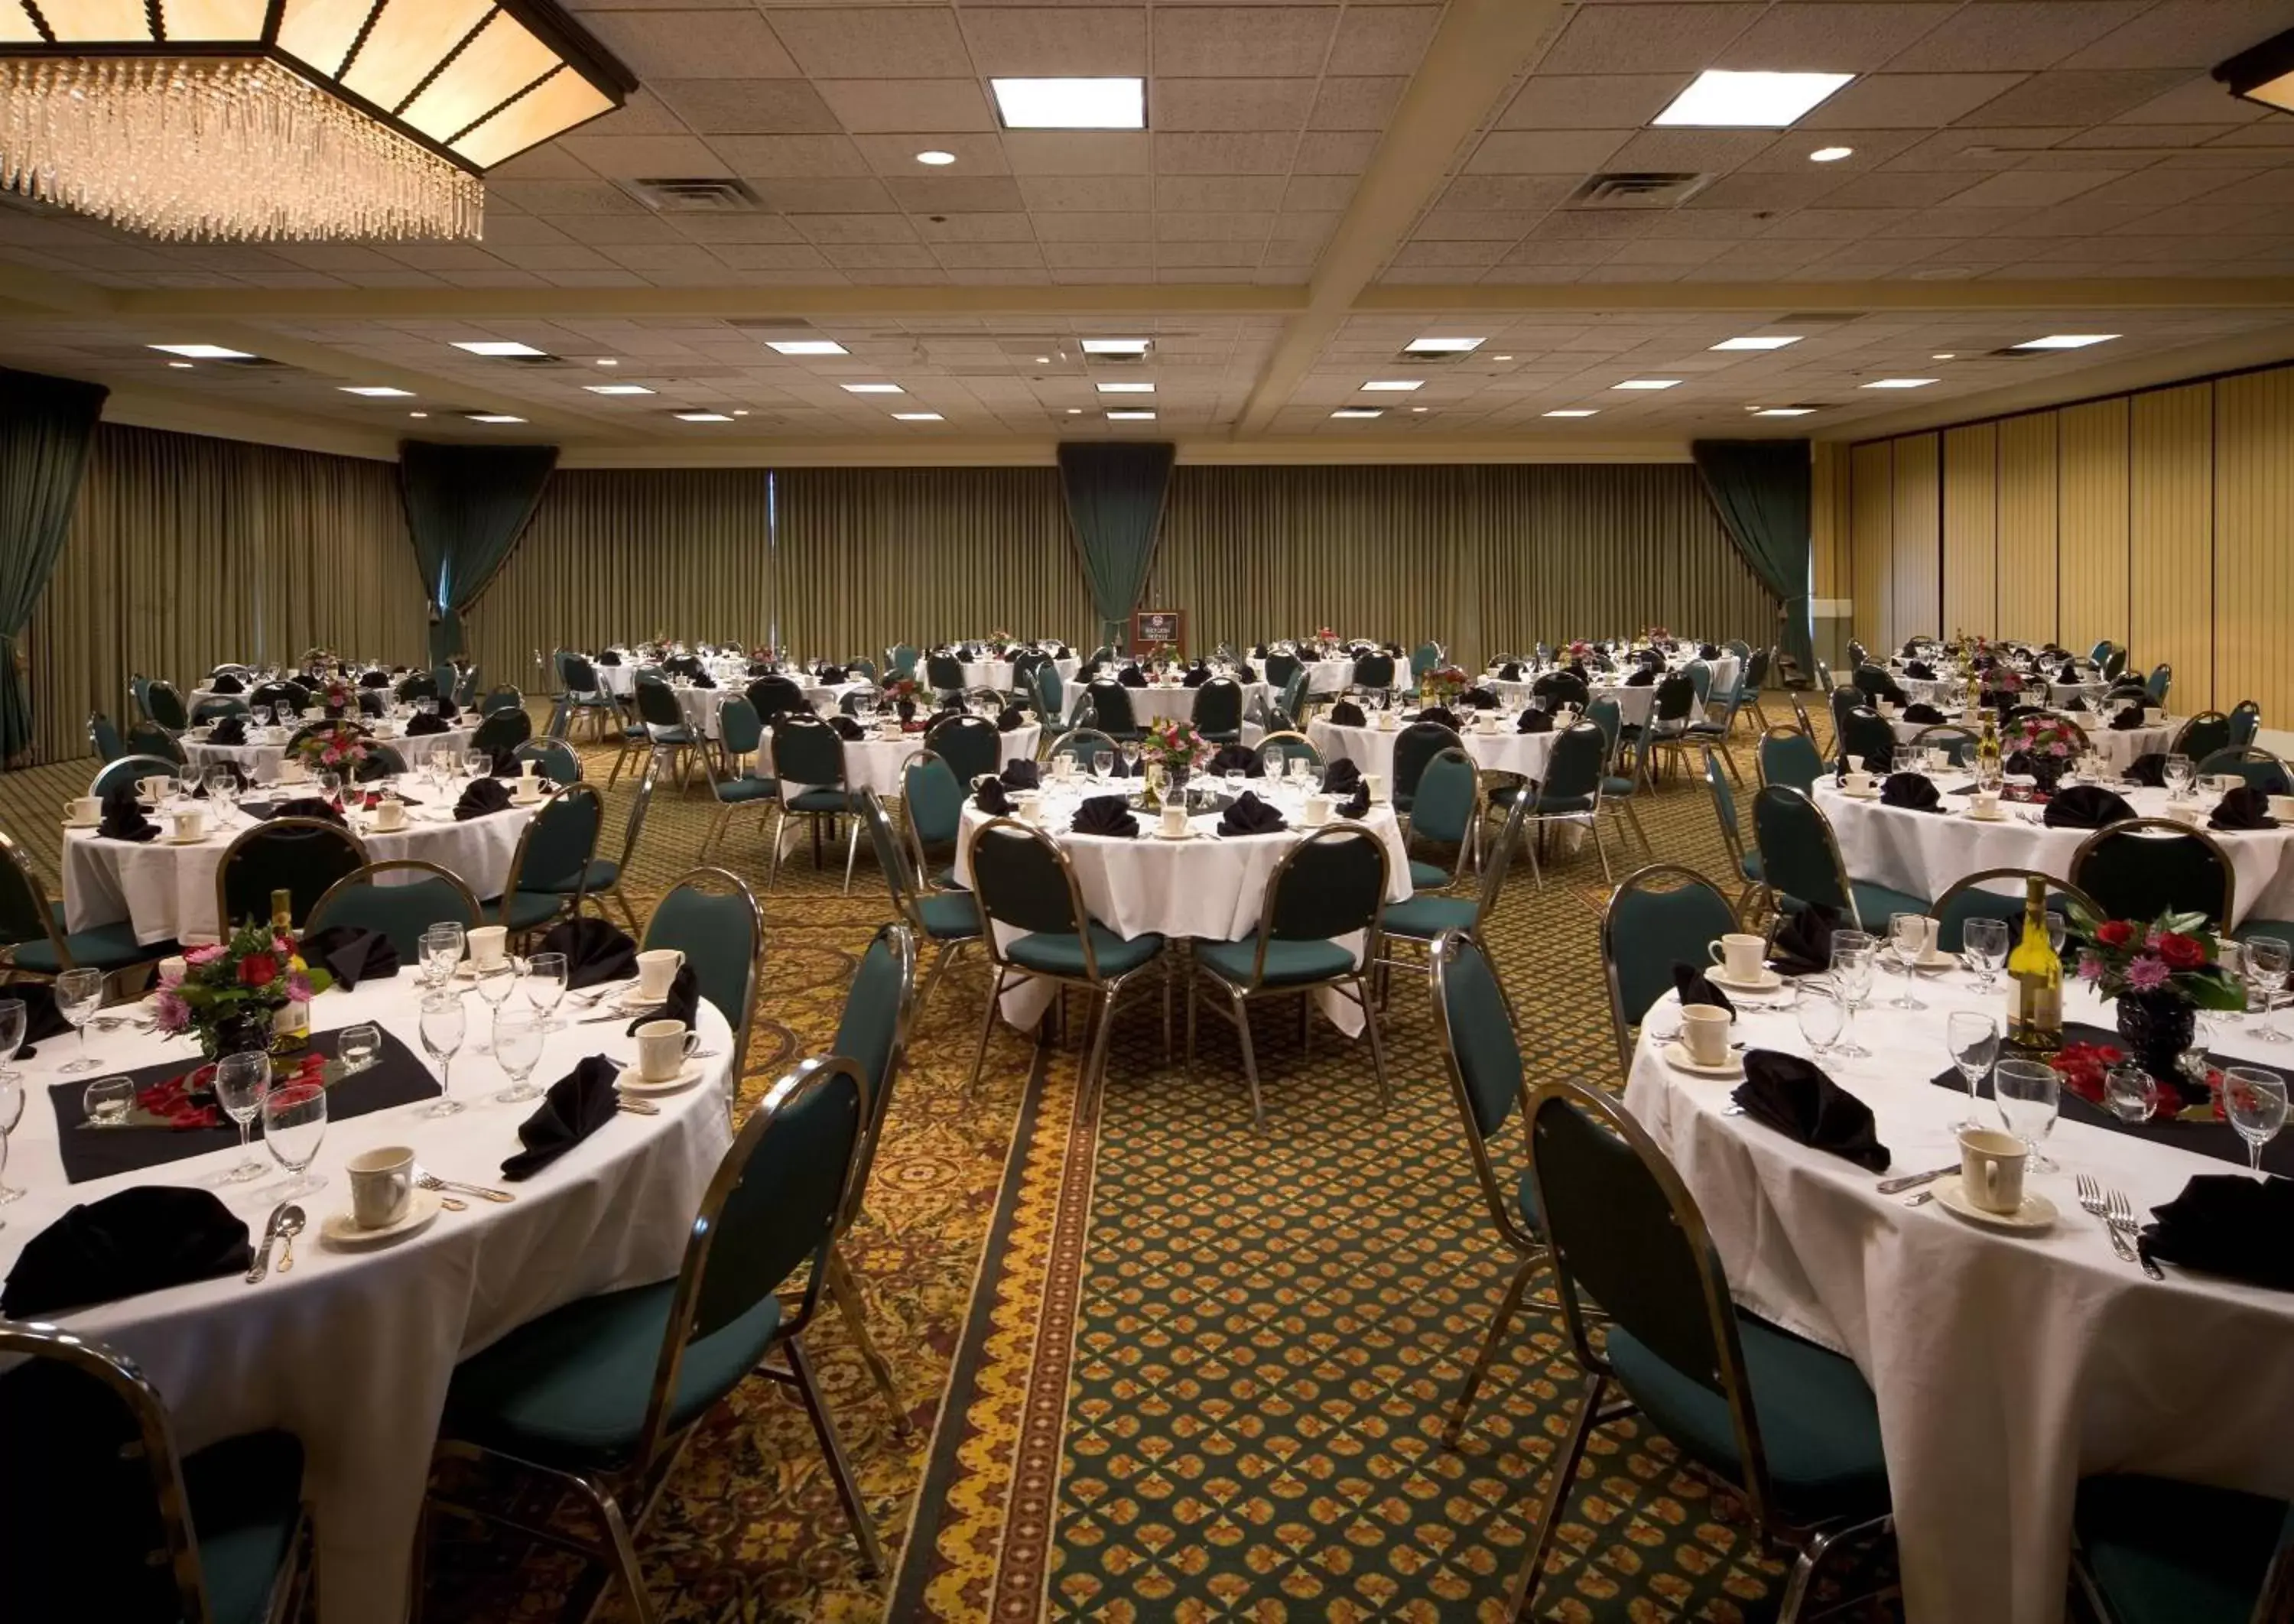 Banquet/Function facilities, Banquet Facilities in Centennial Hotel Spokane